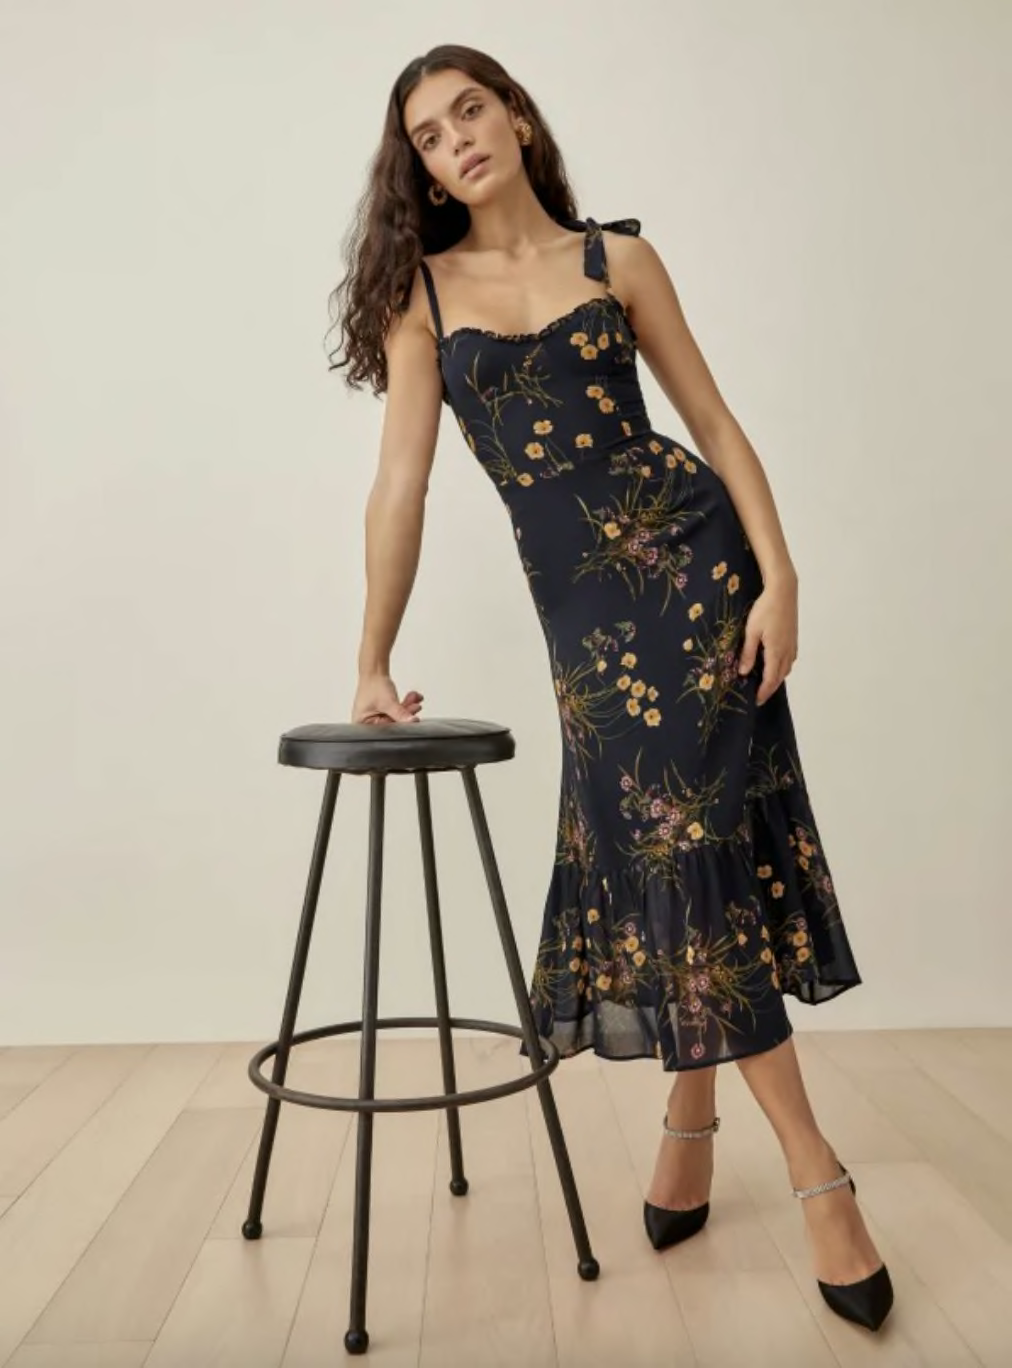 Shop these 9 Regencycore dresses inspired by Bridgerton Season 2